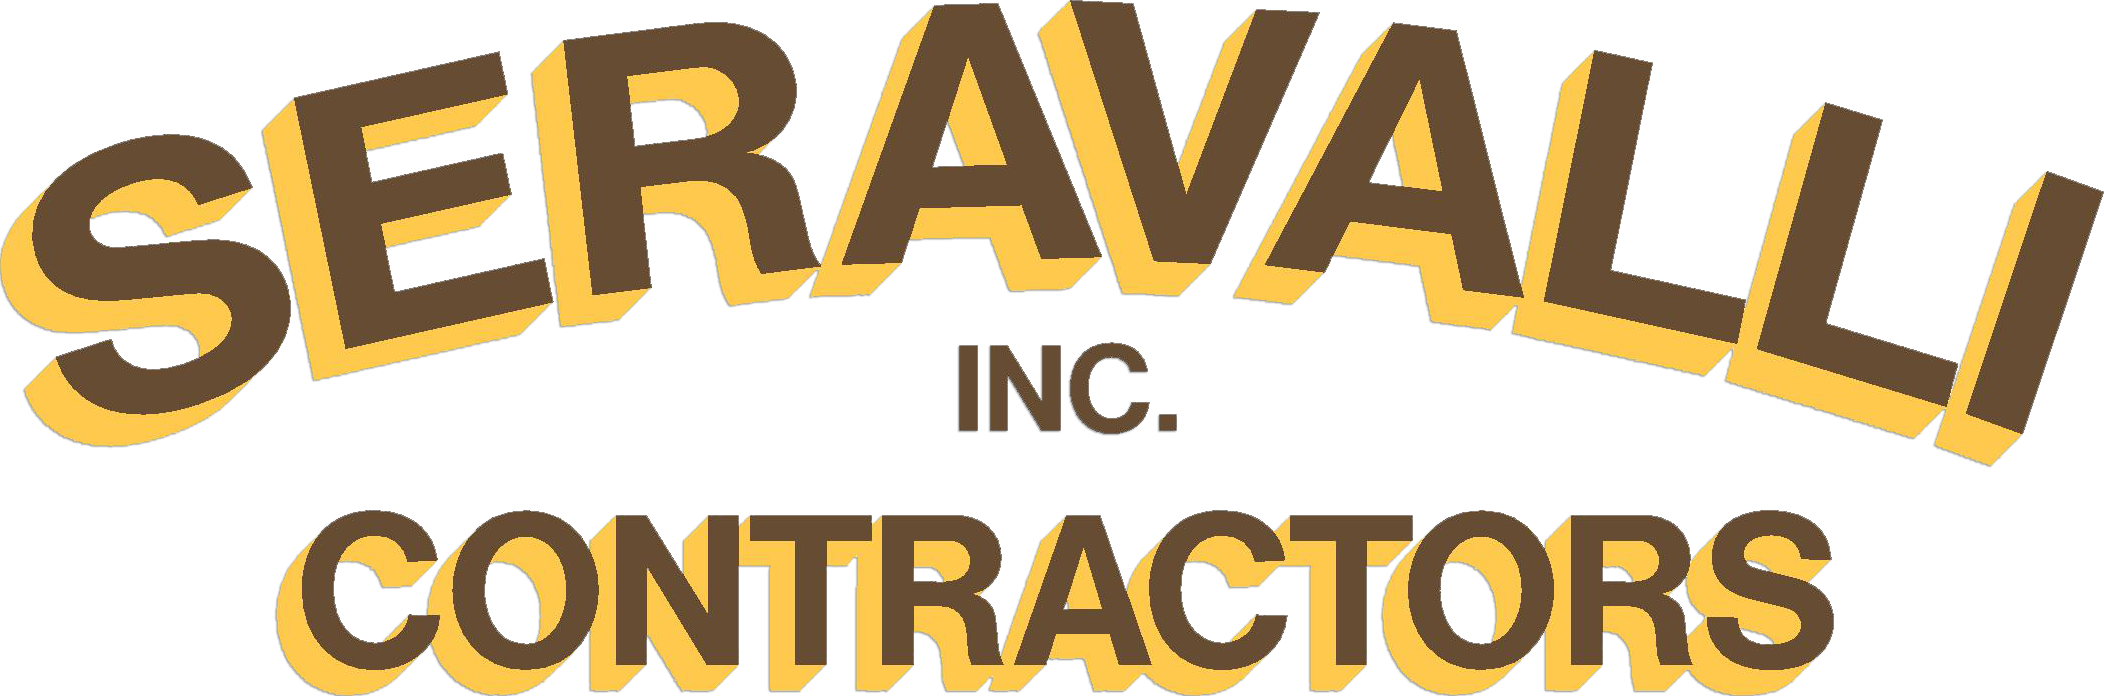 Seravalli Inc. General Contractors, Philadelphia PA